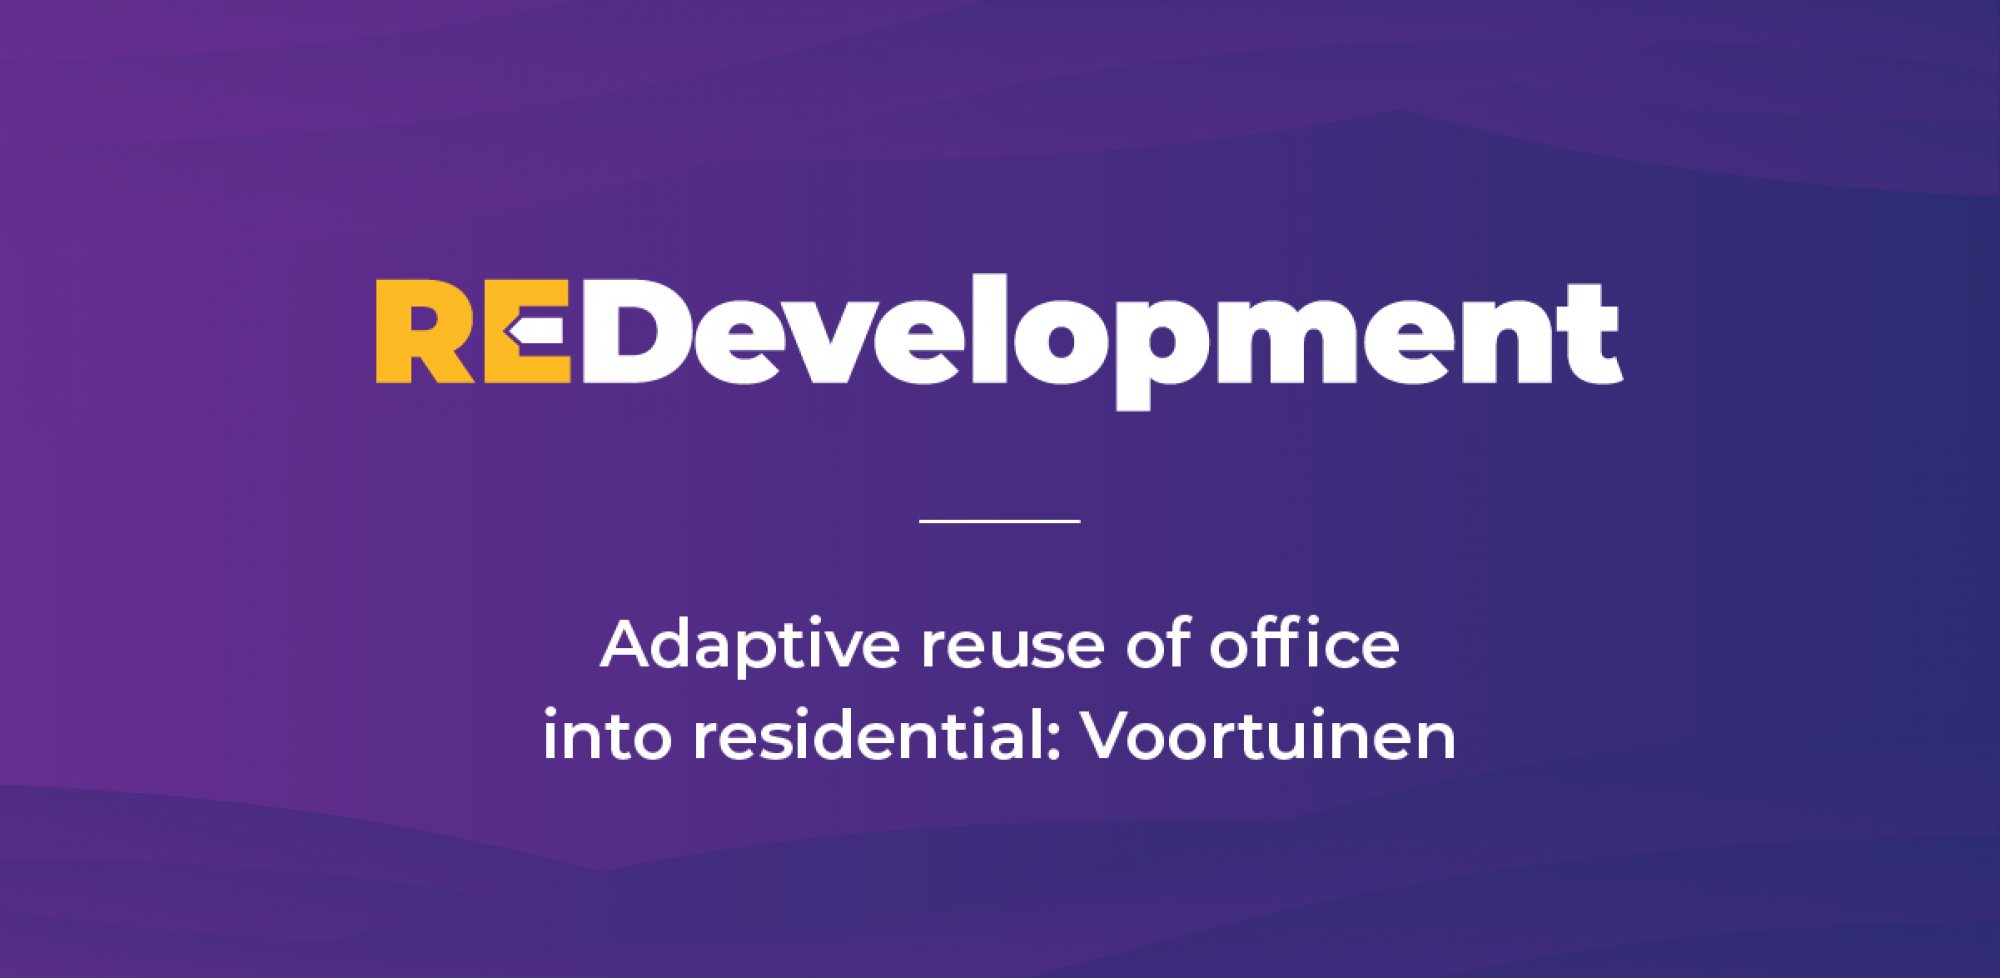 redevelopment-adaptive-reuse-office-residential-voortuinen